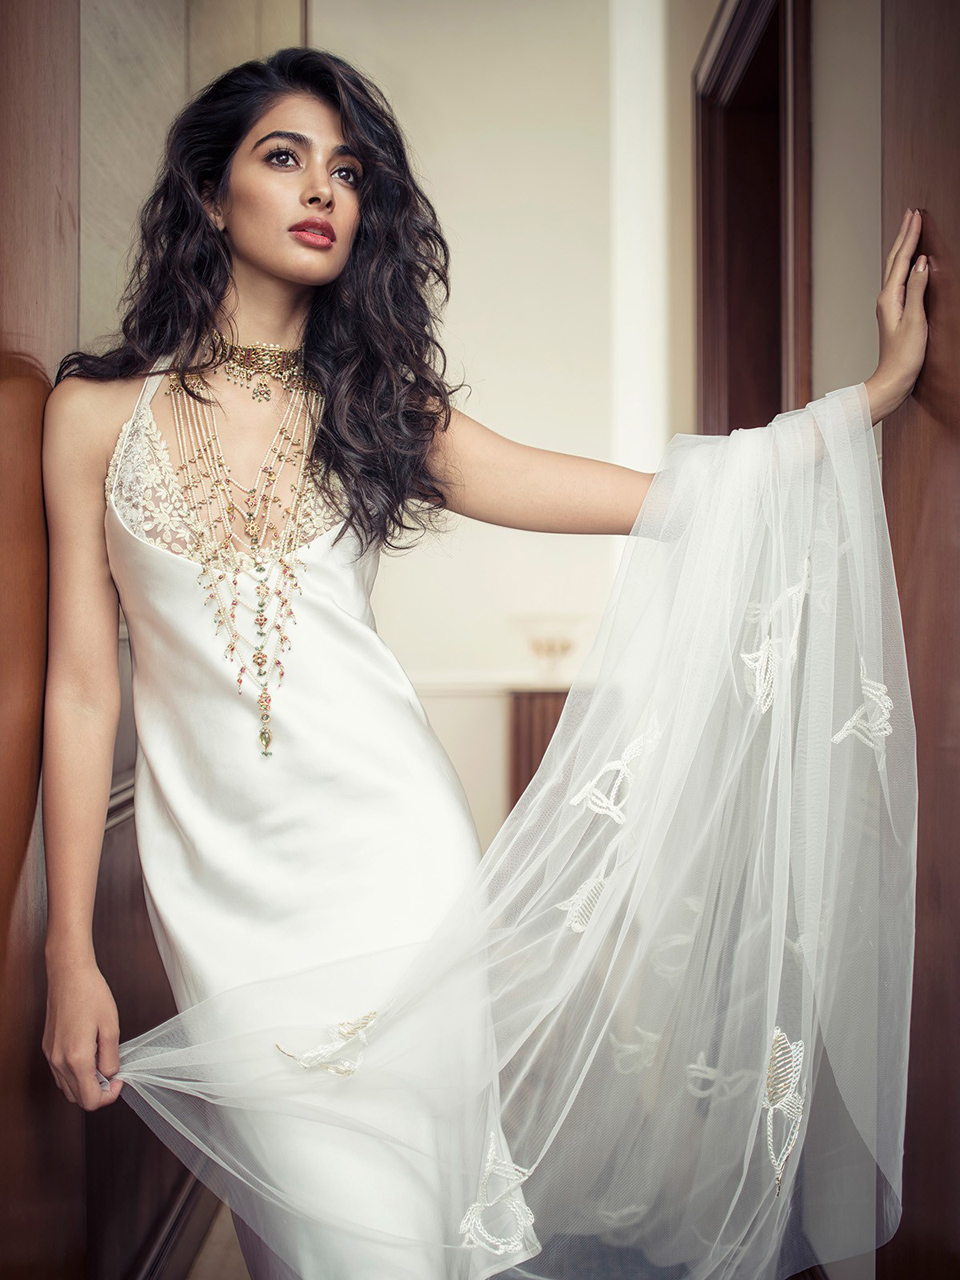 Pooja Hegde Women Actress Model Indian Brunette Dark Hair White Dress Women Indoors 960x1280